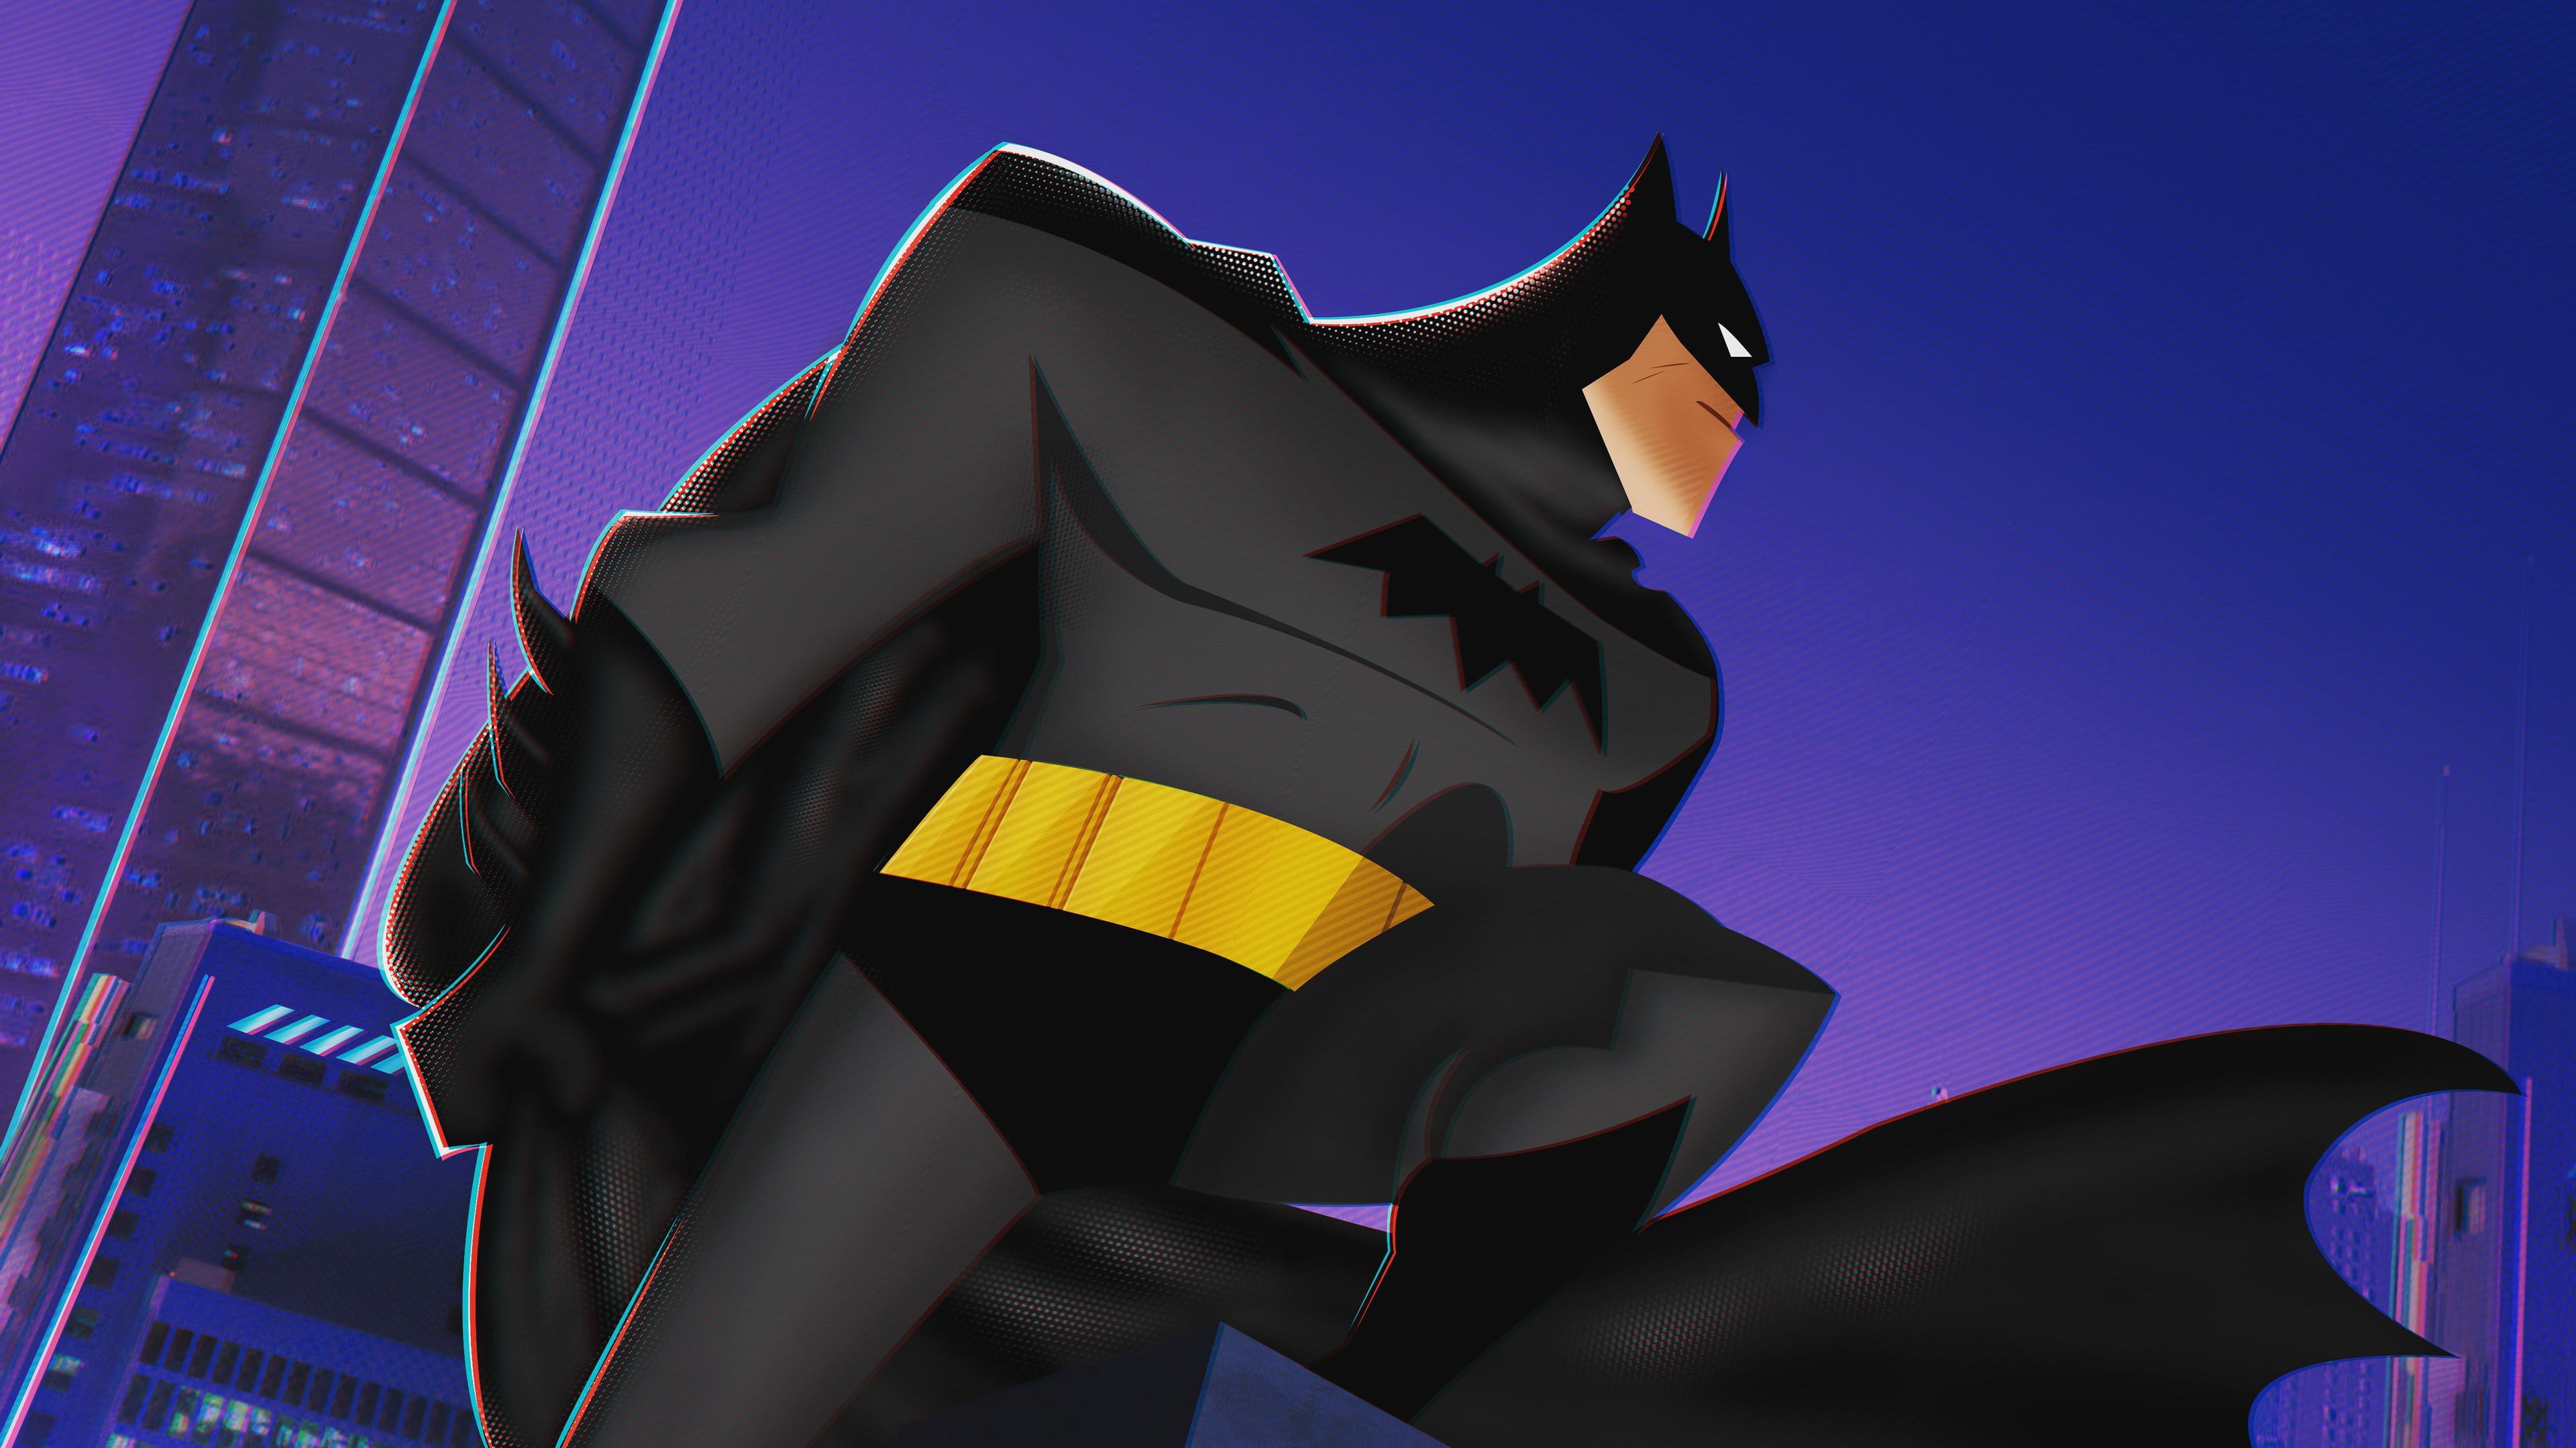 Ics Batman 4k Ultra HD Wallpaper By Mathew Paul